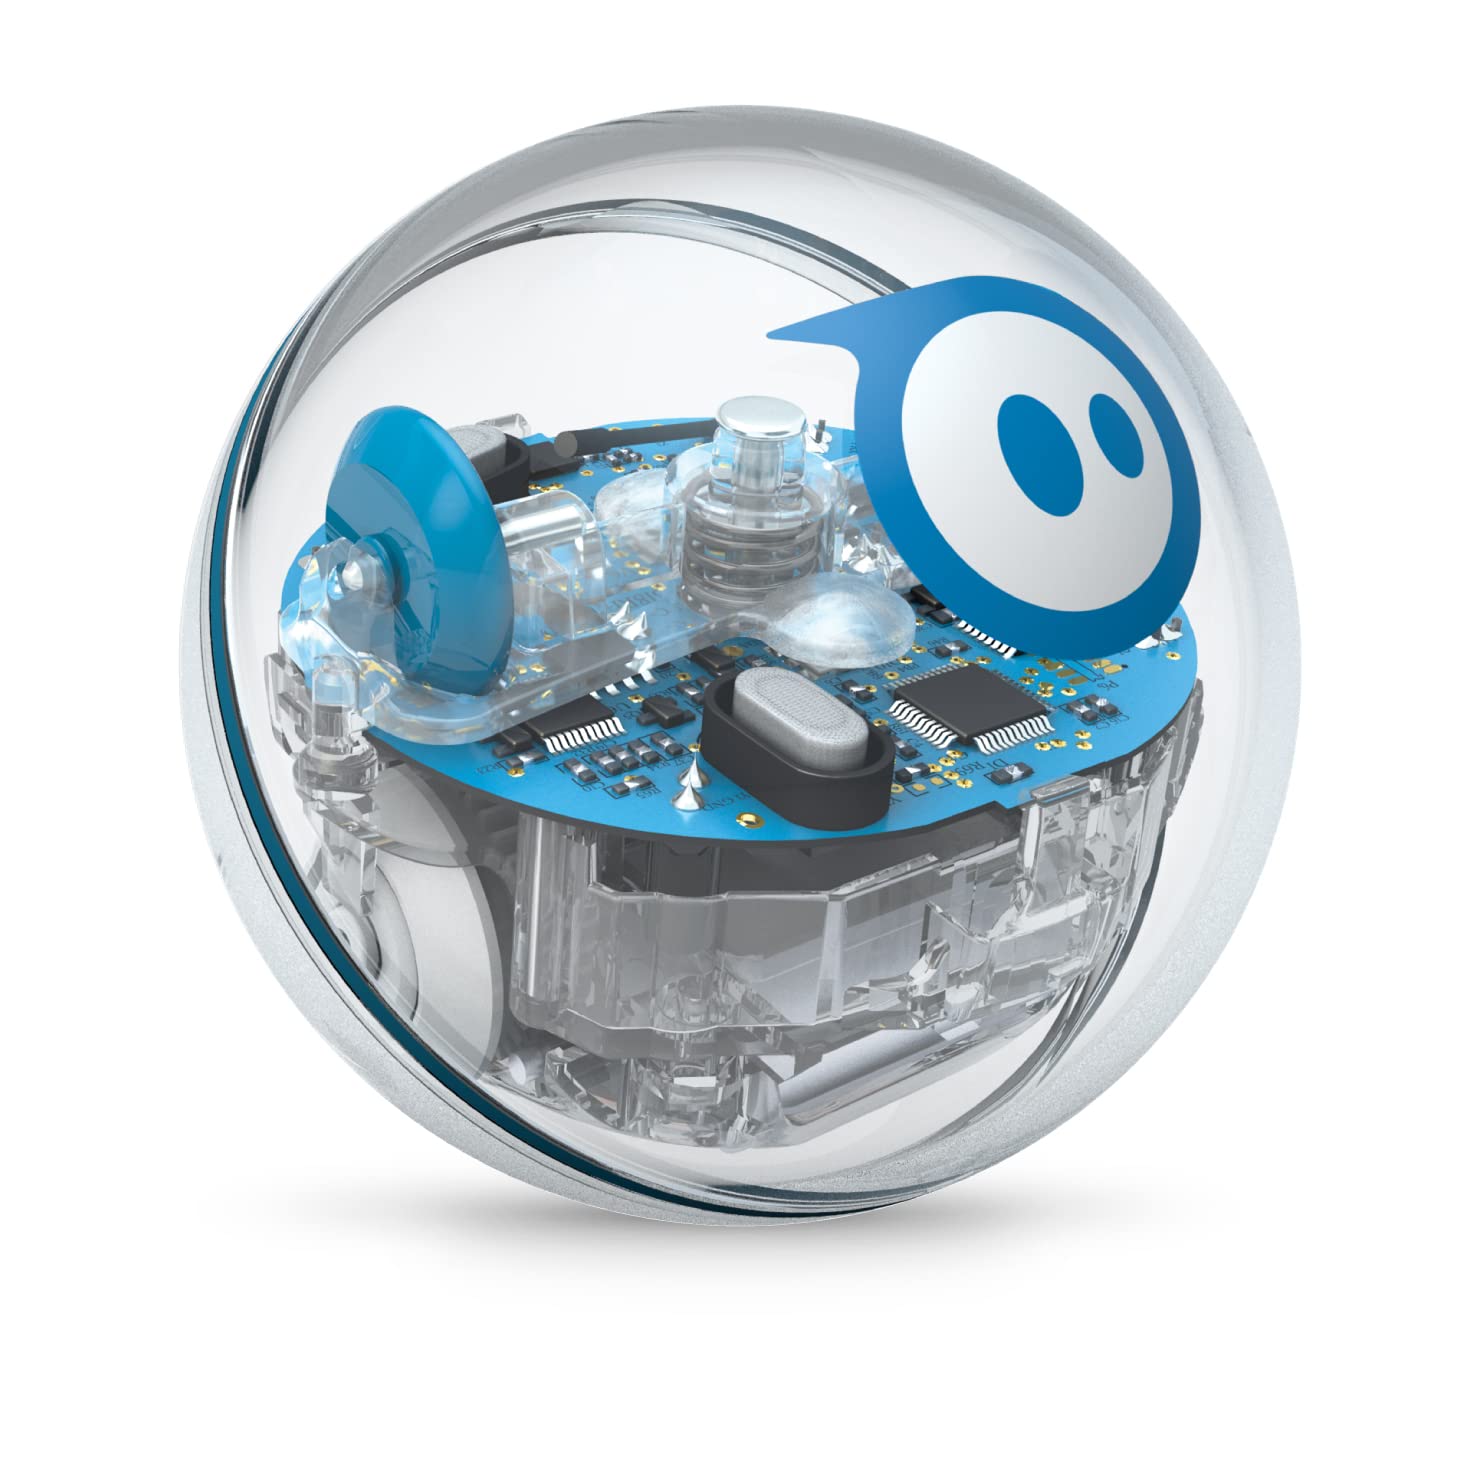 sphero mini robot